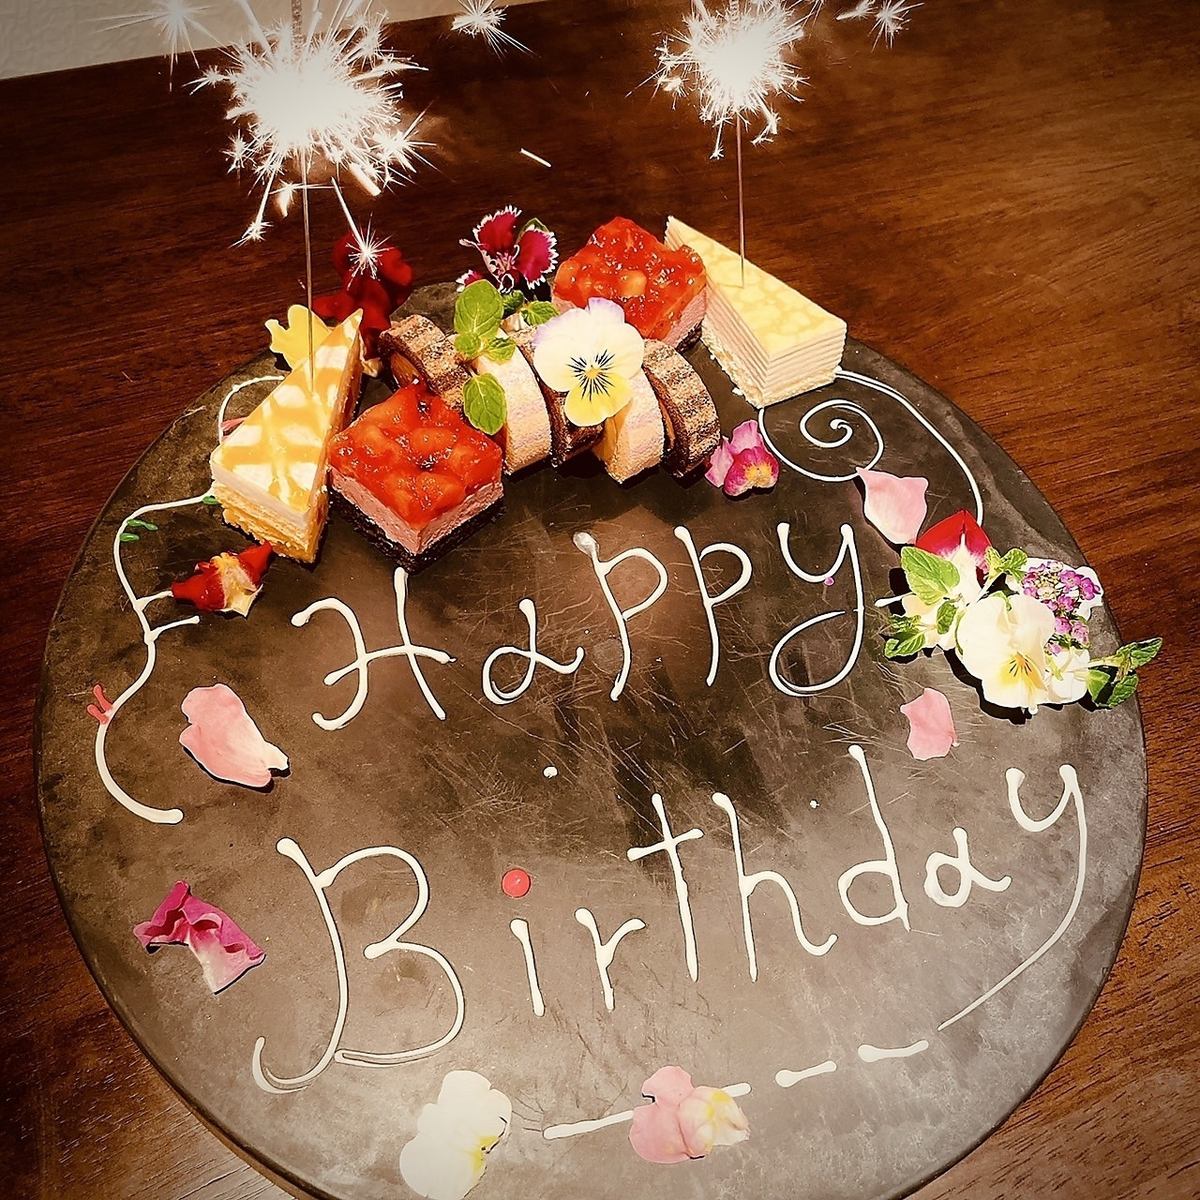 Birthdays and anniversaries ◎ Dessert plate gift with message!